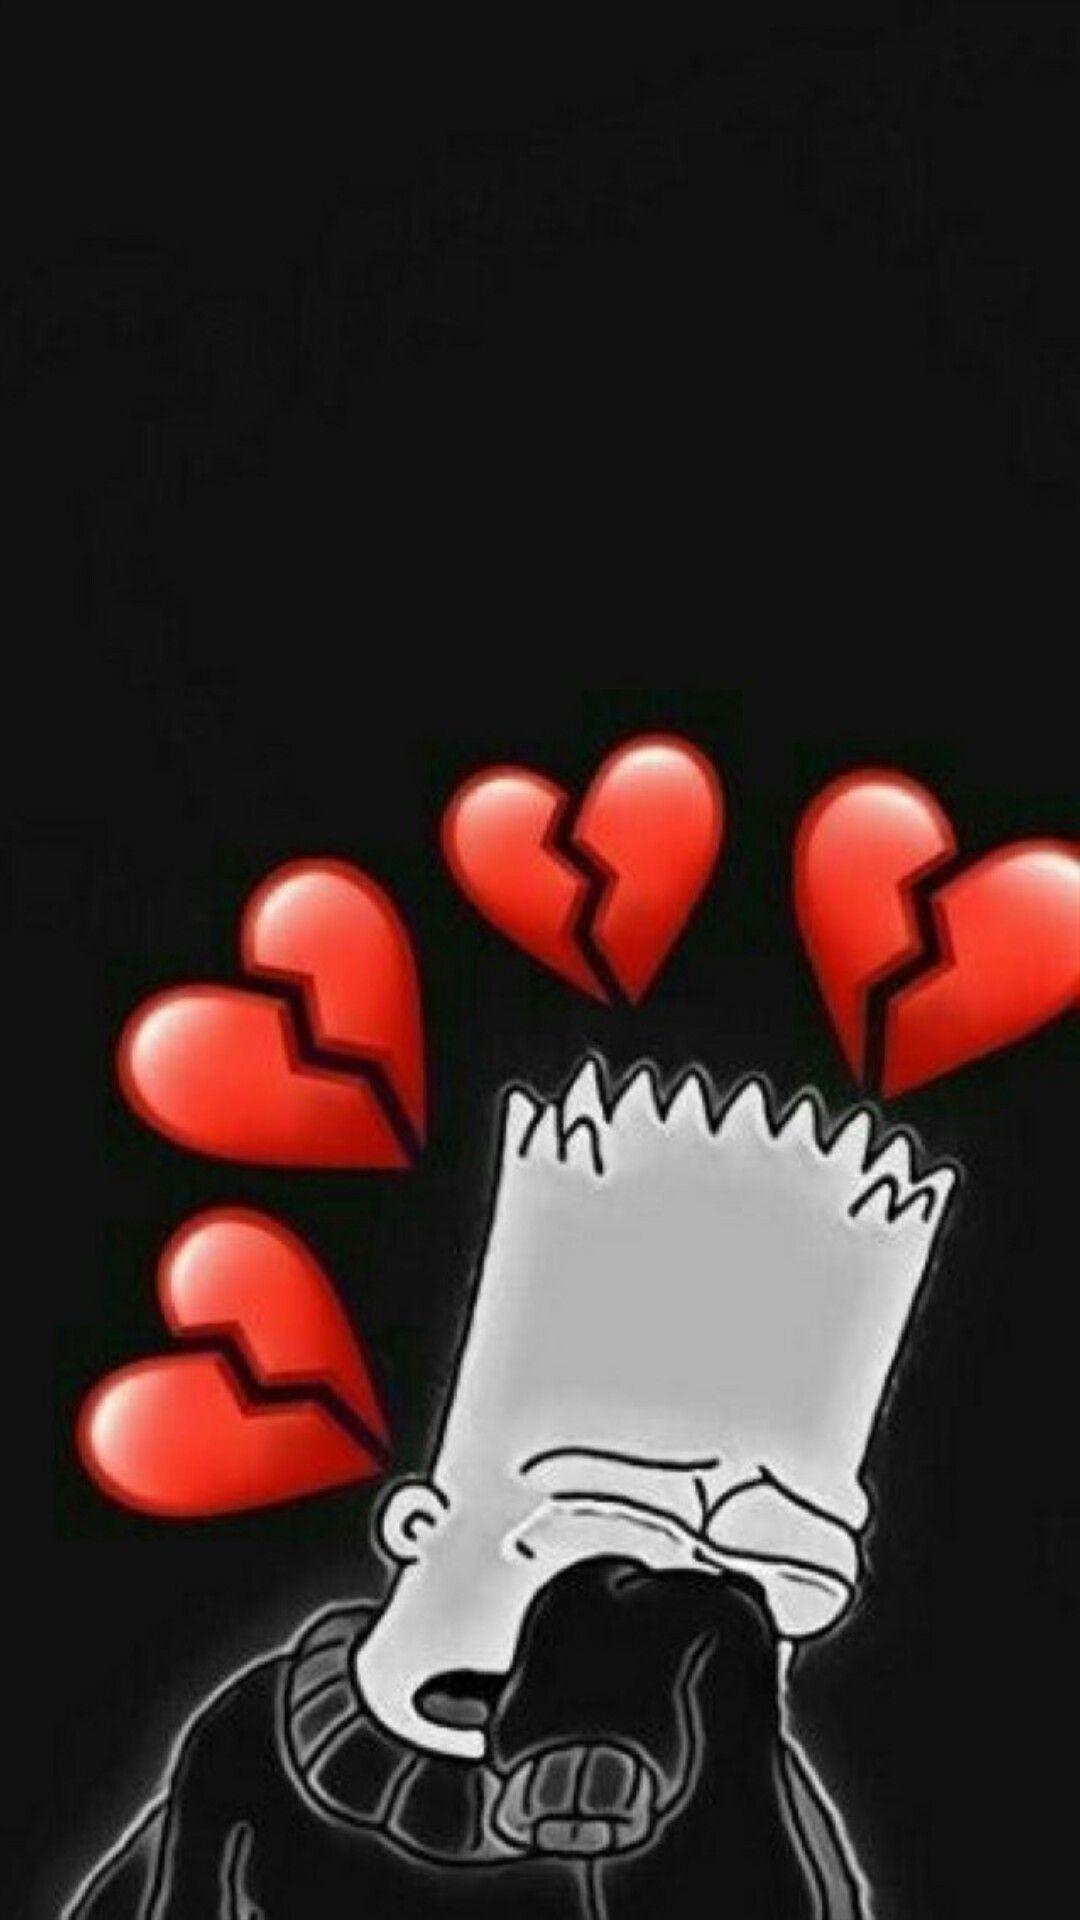 Depressed Bart Simpson Wallpapers Top Free Depressed Bart Simpson Backgrounds Wallpaperaccess 